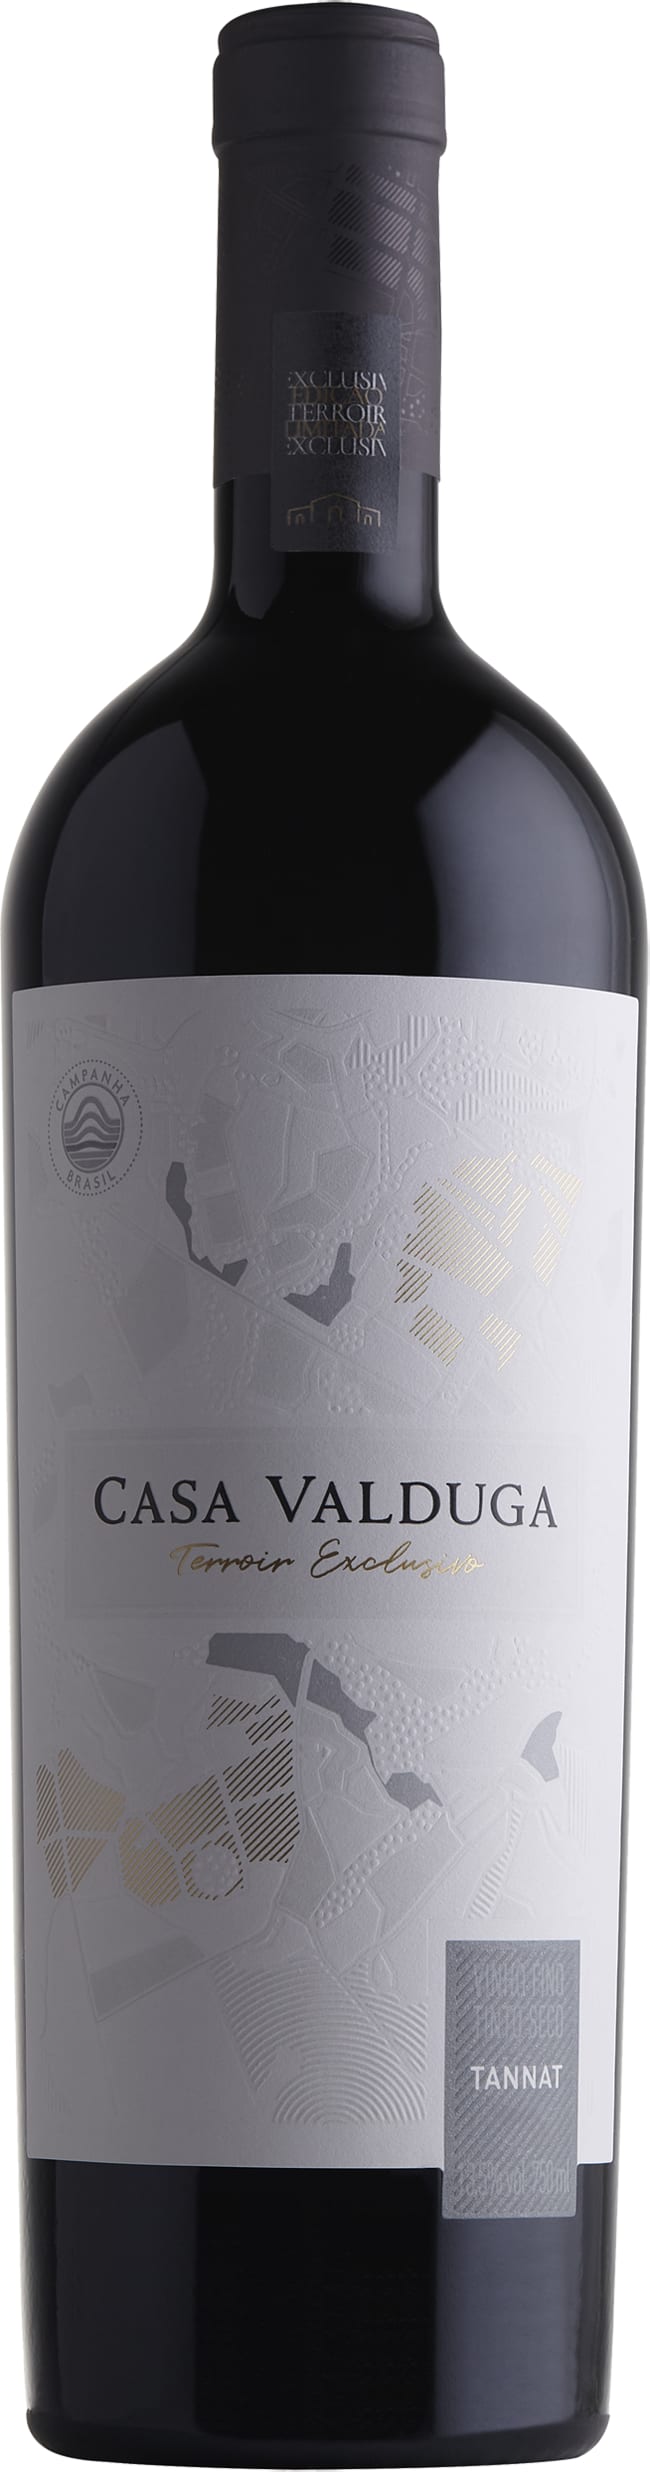 Casa Valduga Terrior Exclusivo Tannat 2020 75cl - Buy Casa Valduga Wines from GREAT WINES DIRECT wine shop